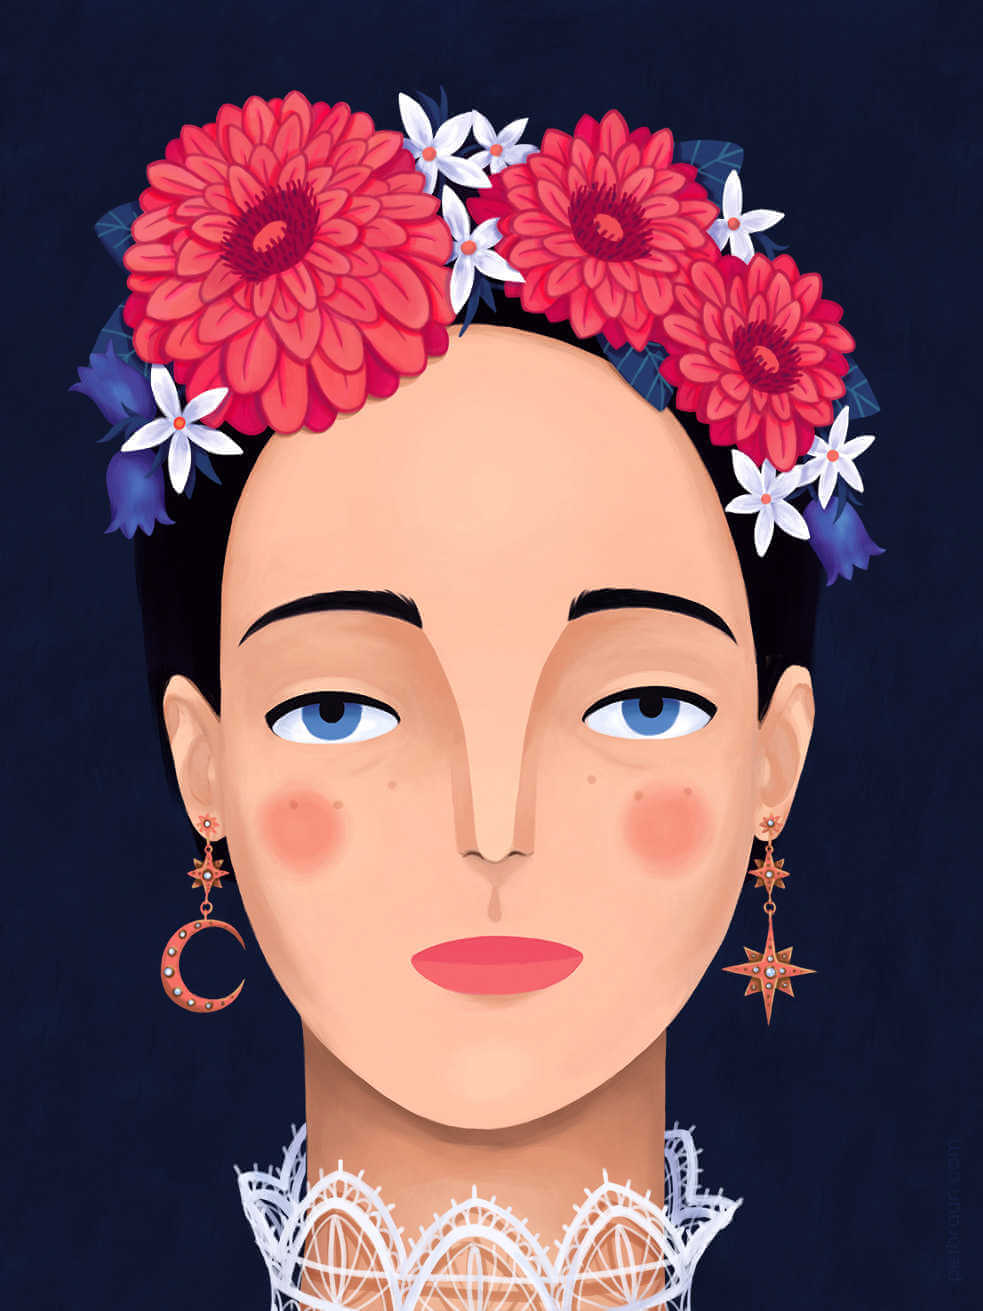 Pintura de Frida kalho ilustrada por petra braun